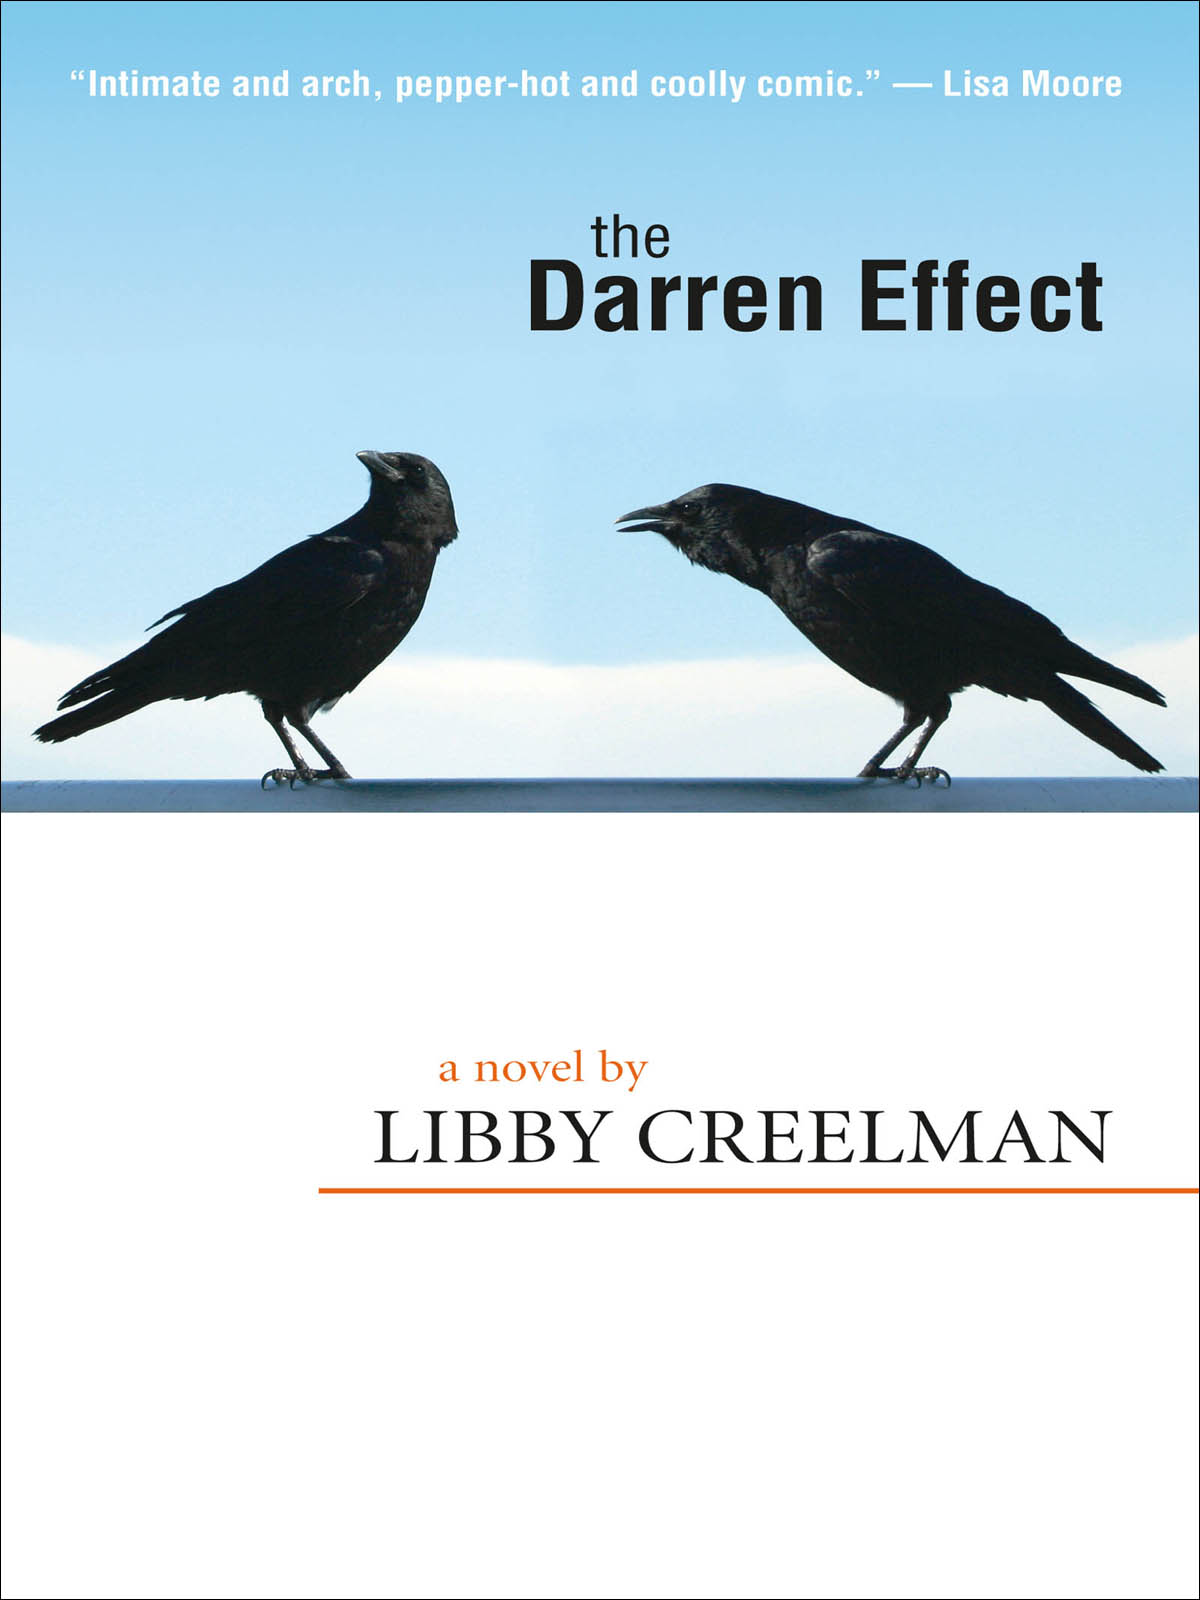 The Darren Effect